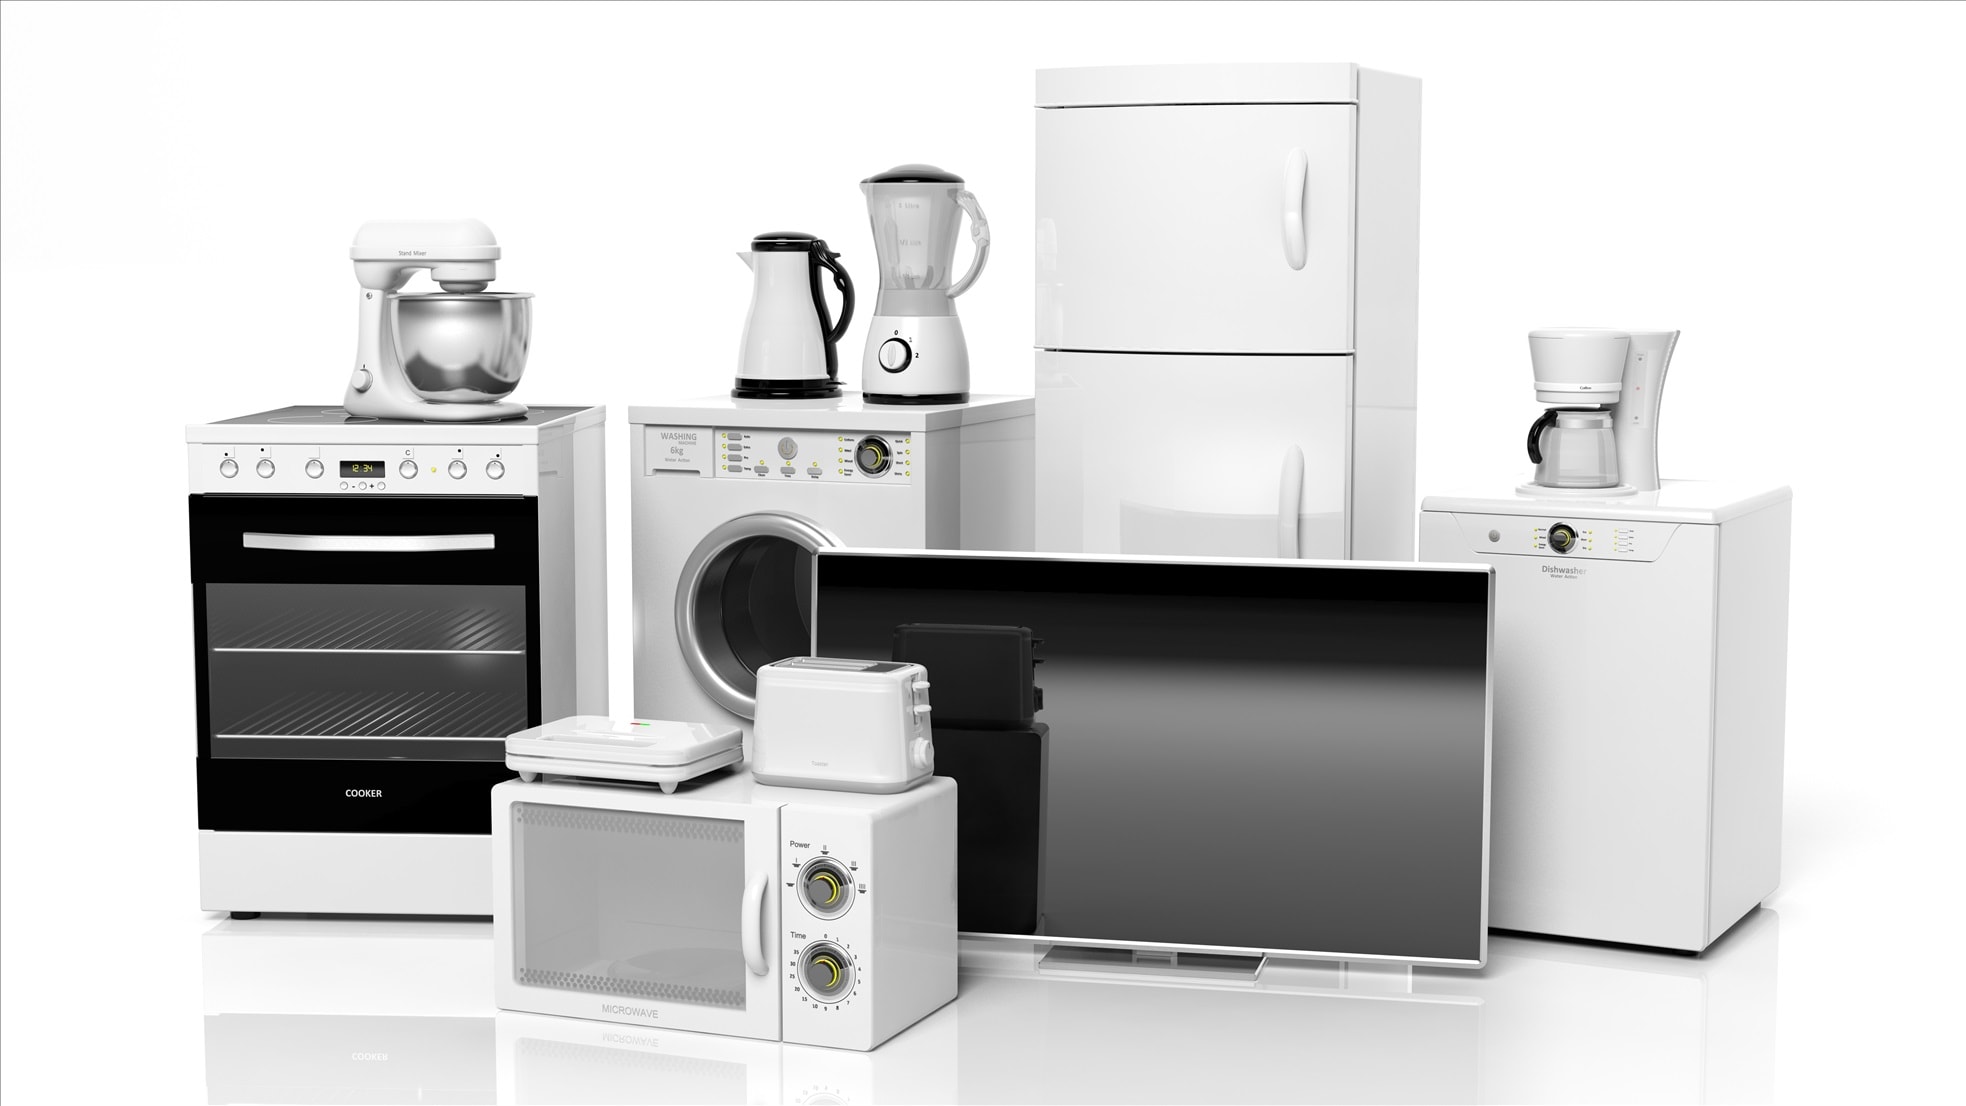 modern appliances